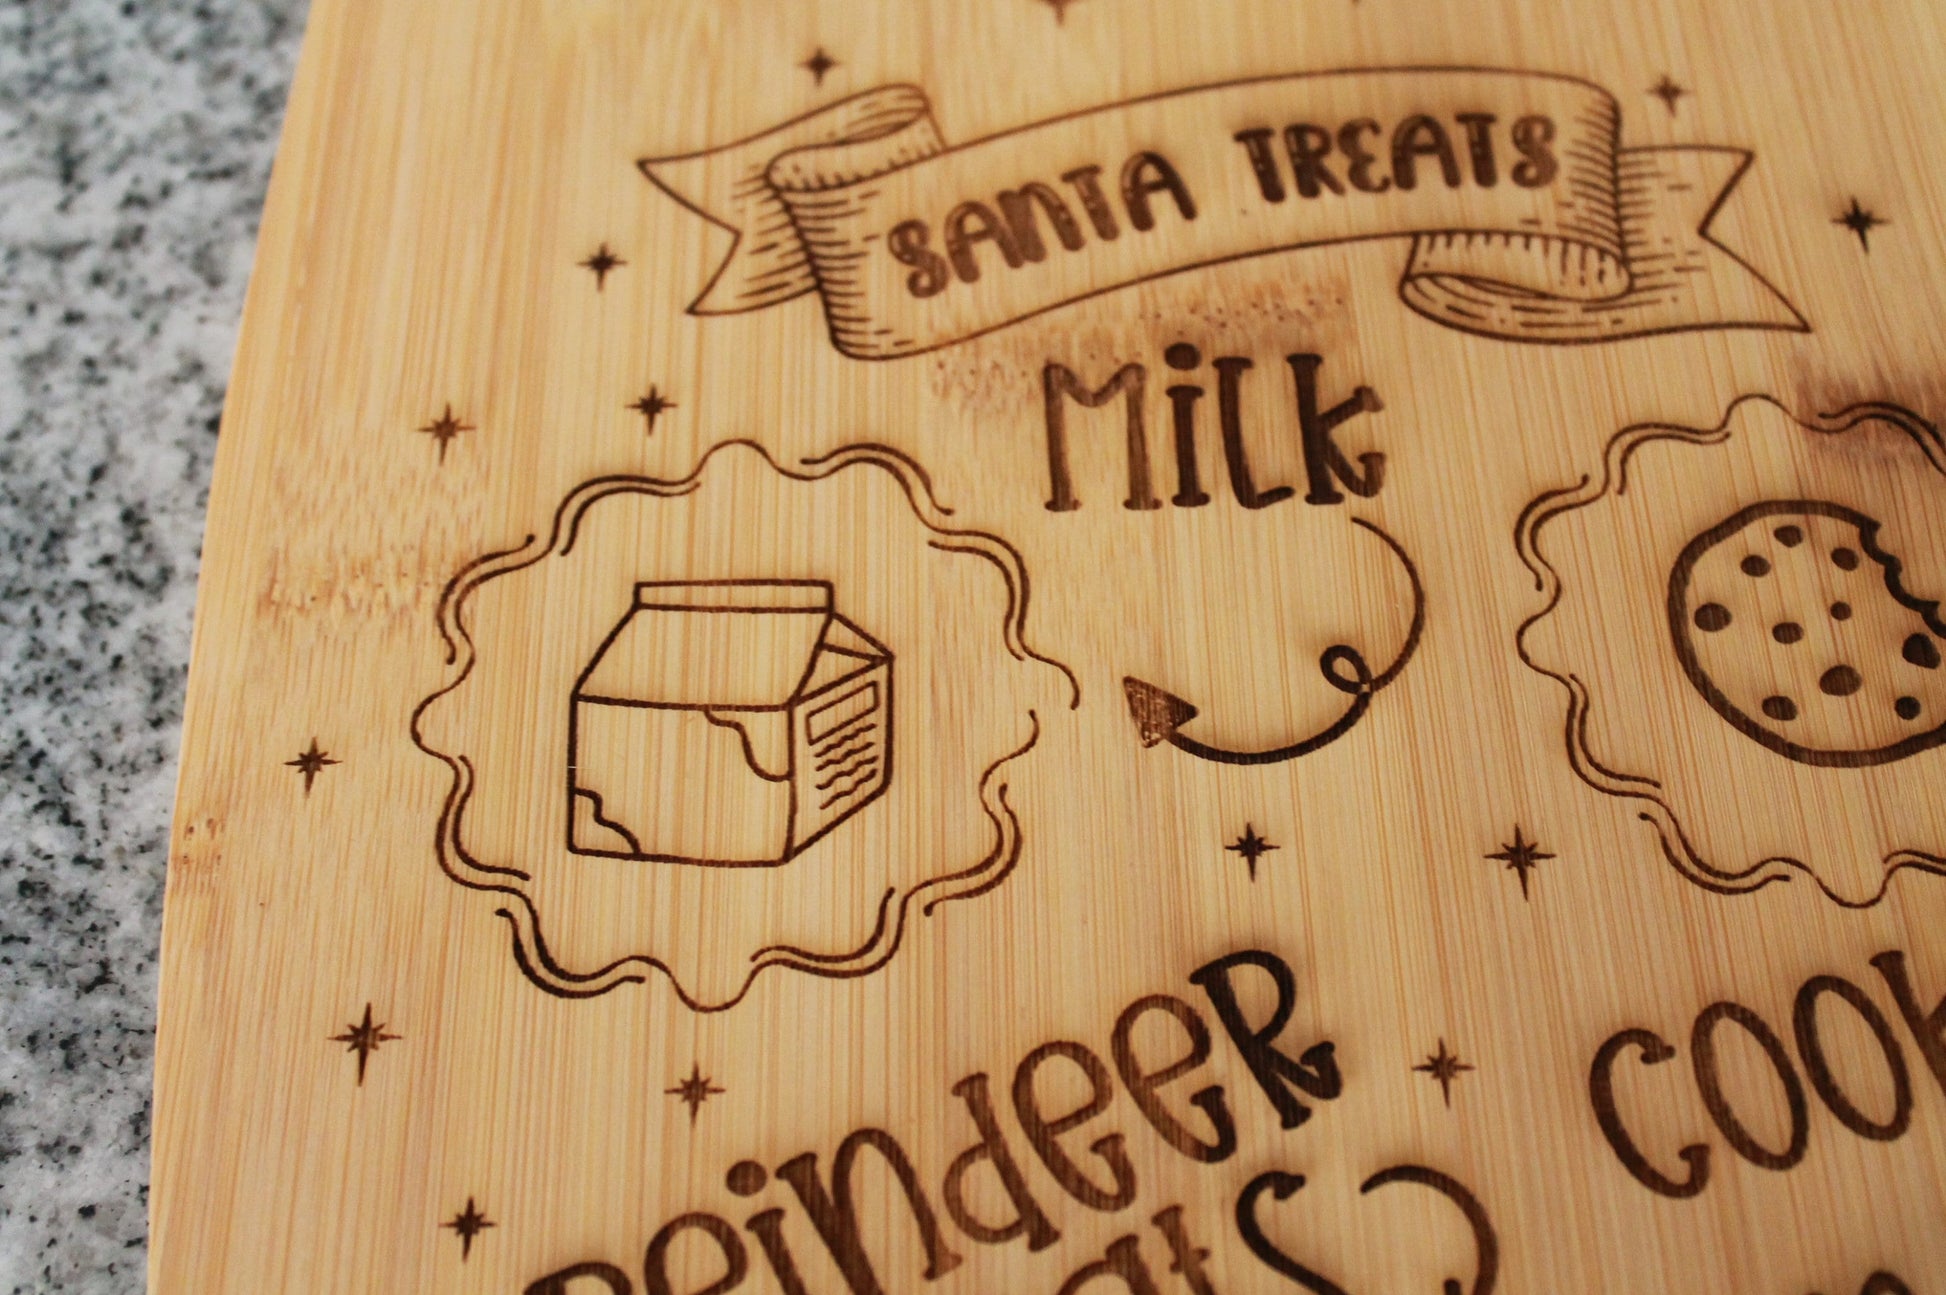 Santas Treats Reindeer Food Night Before Christmas Cookies for Santa Claus Milk and Cookies Carrots Kids Engraved Cutting Board Wooden Laser